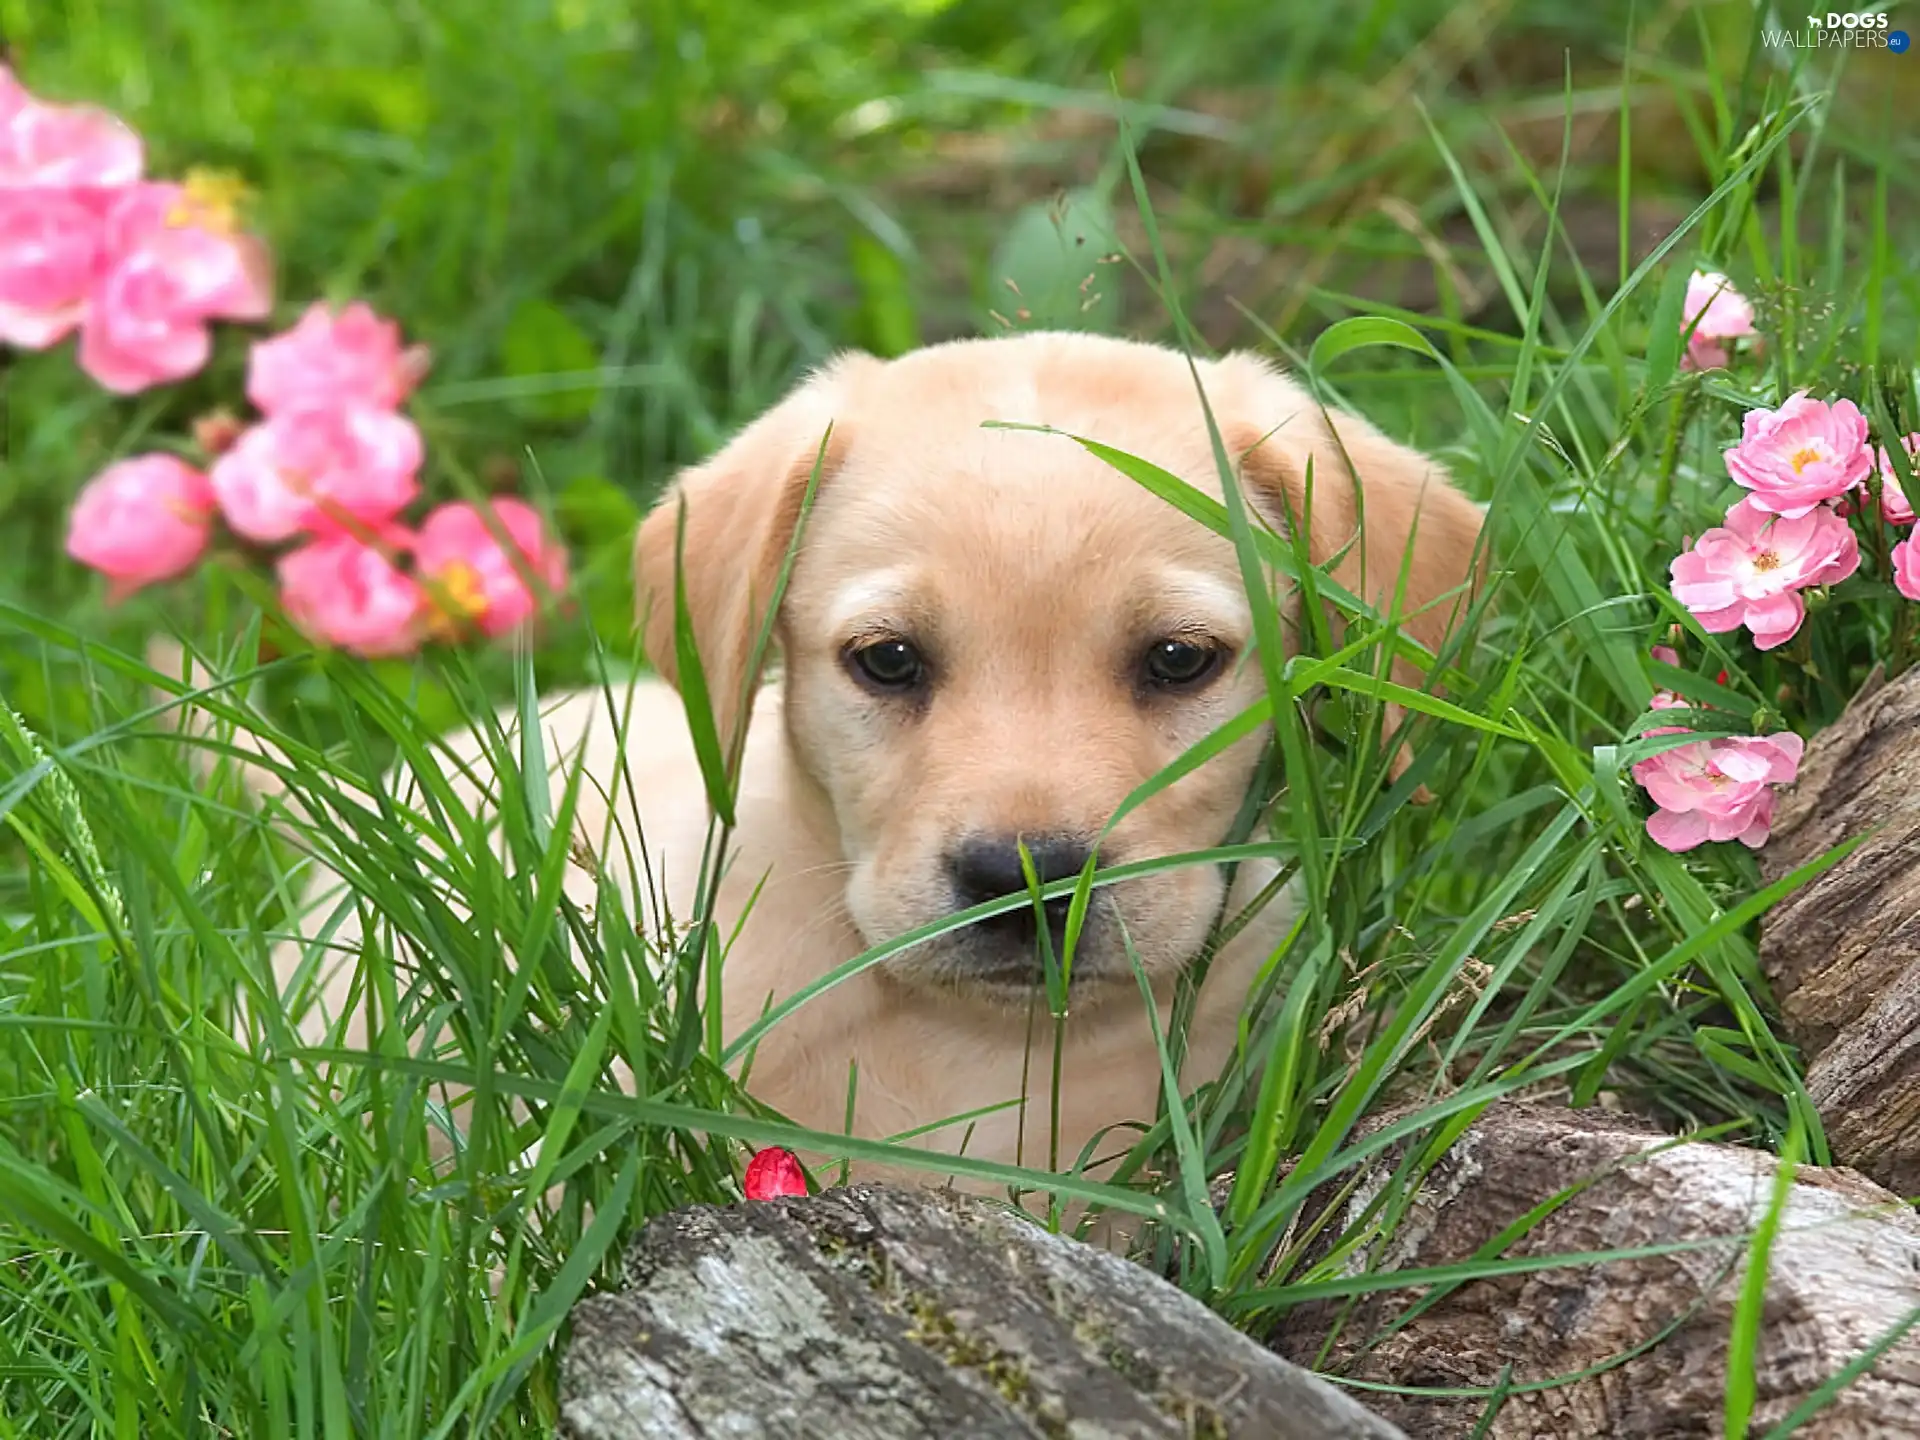 Flowers, doggy, grass